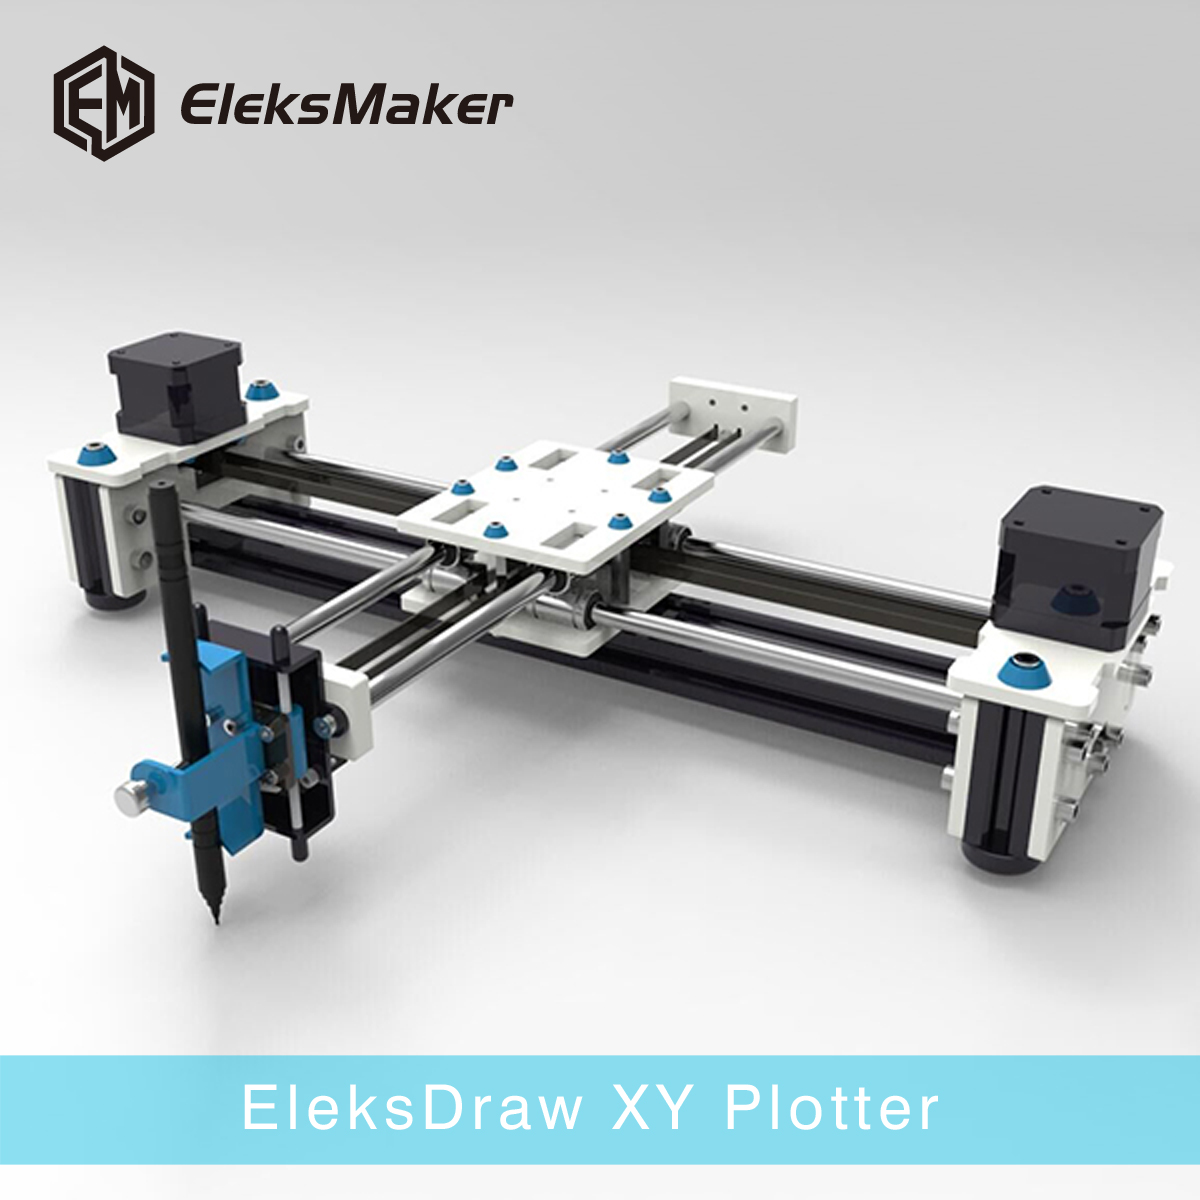 EleksMaker EleksDraw XY Plotter Drawing Machine